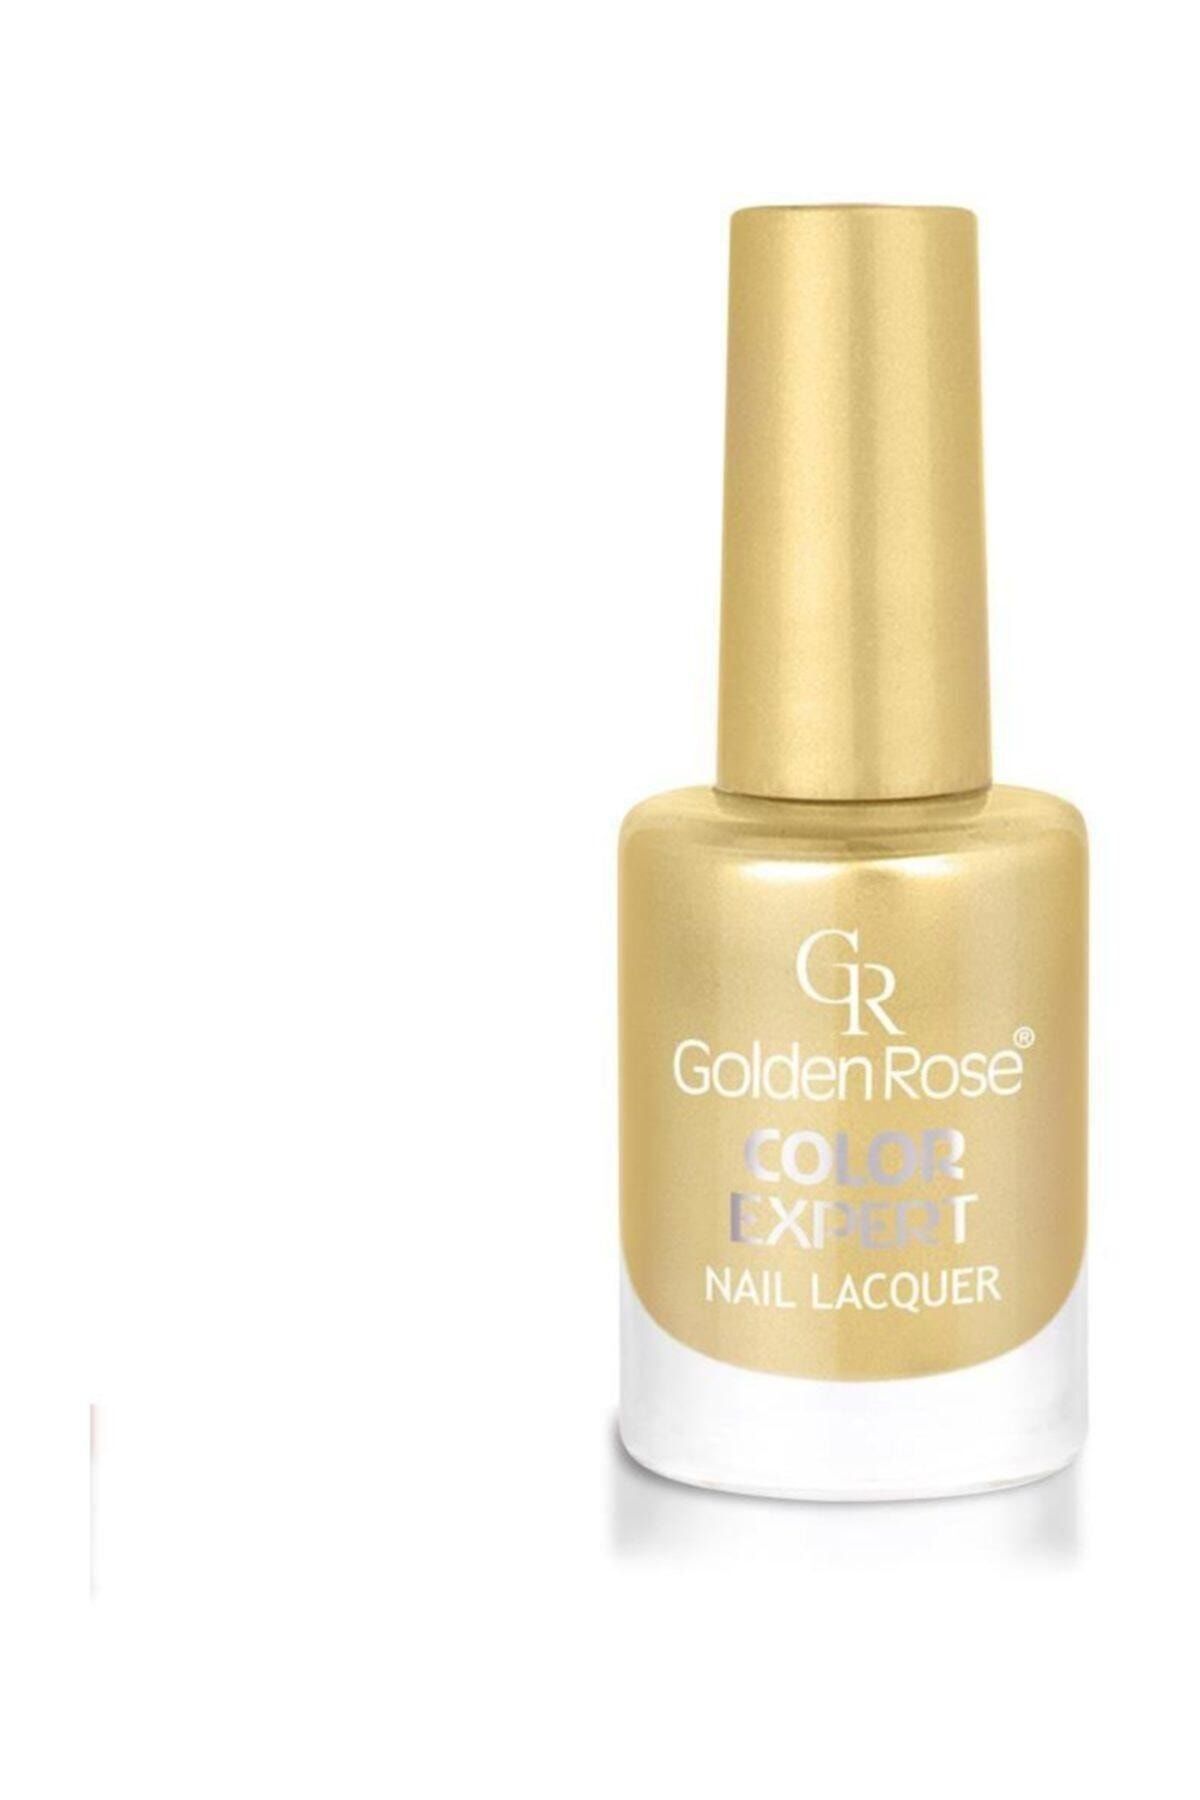 Golden Rose Oje - Color Expert Nail Lacquer No: 61